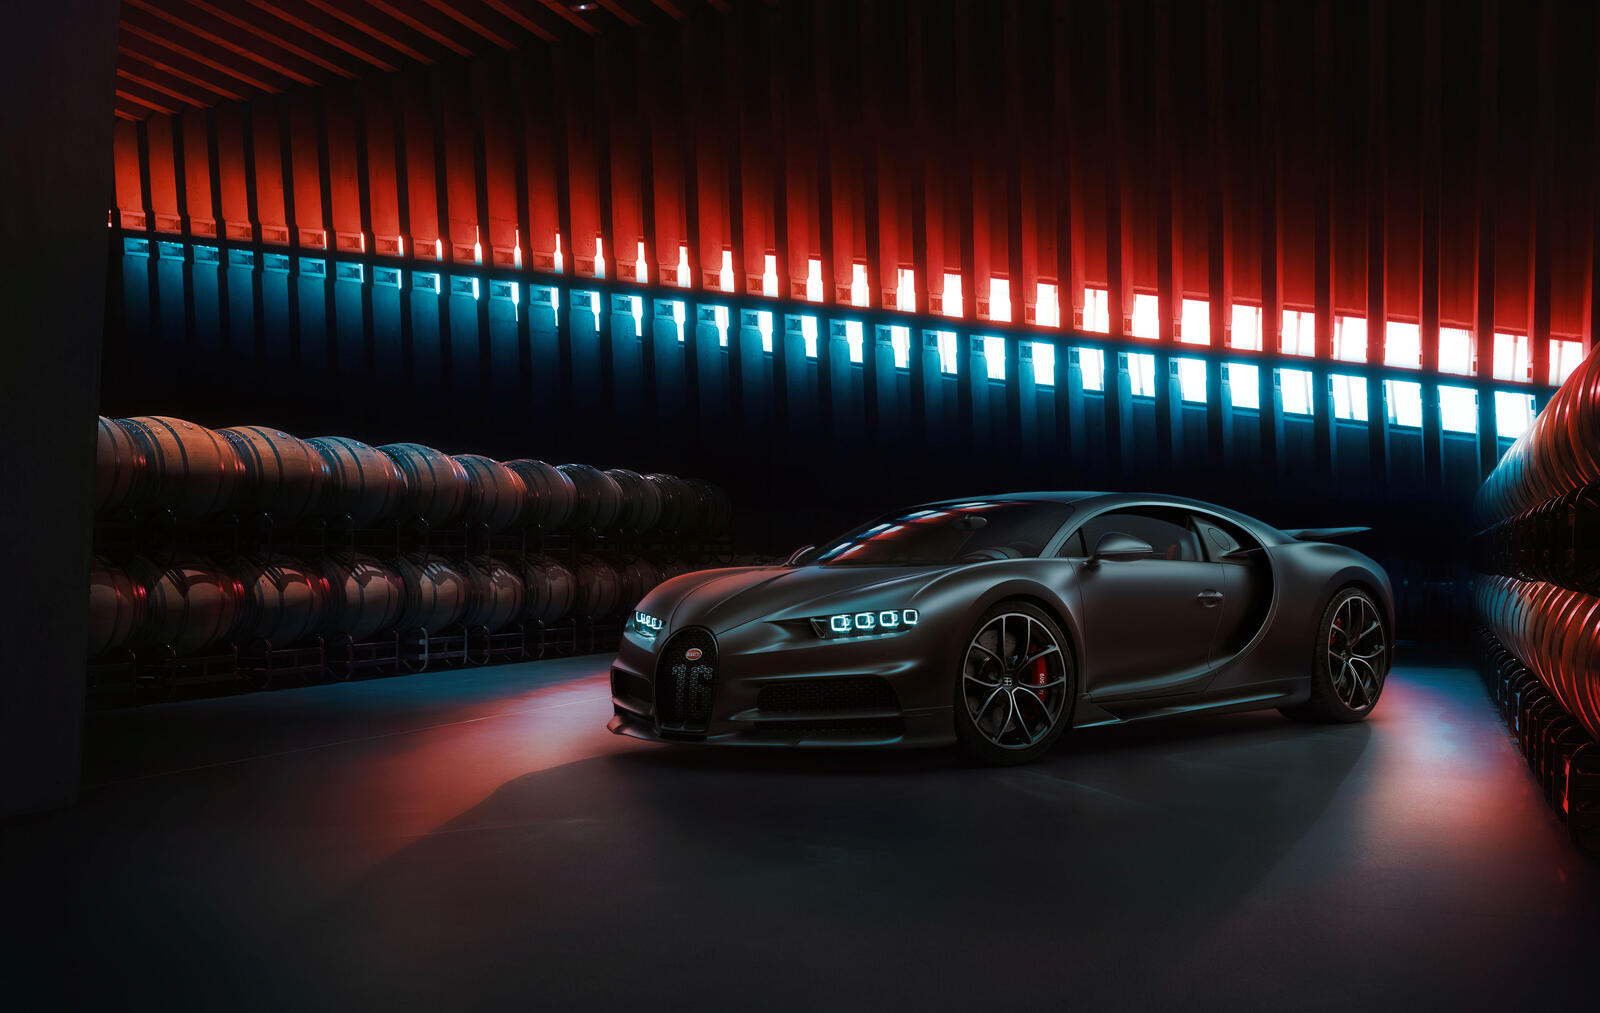 Wallpapers cars 2020 year Bugatti Behance on the desktop